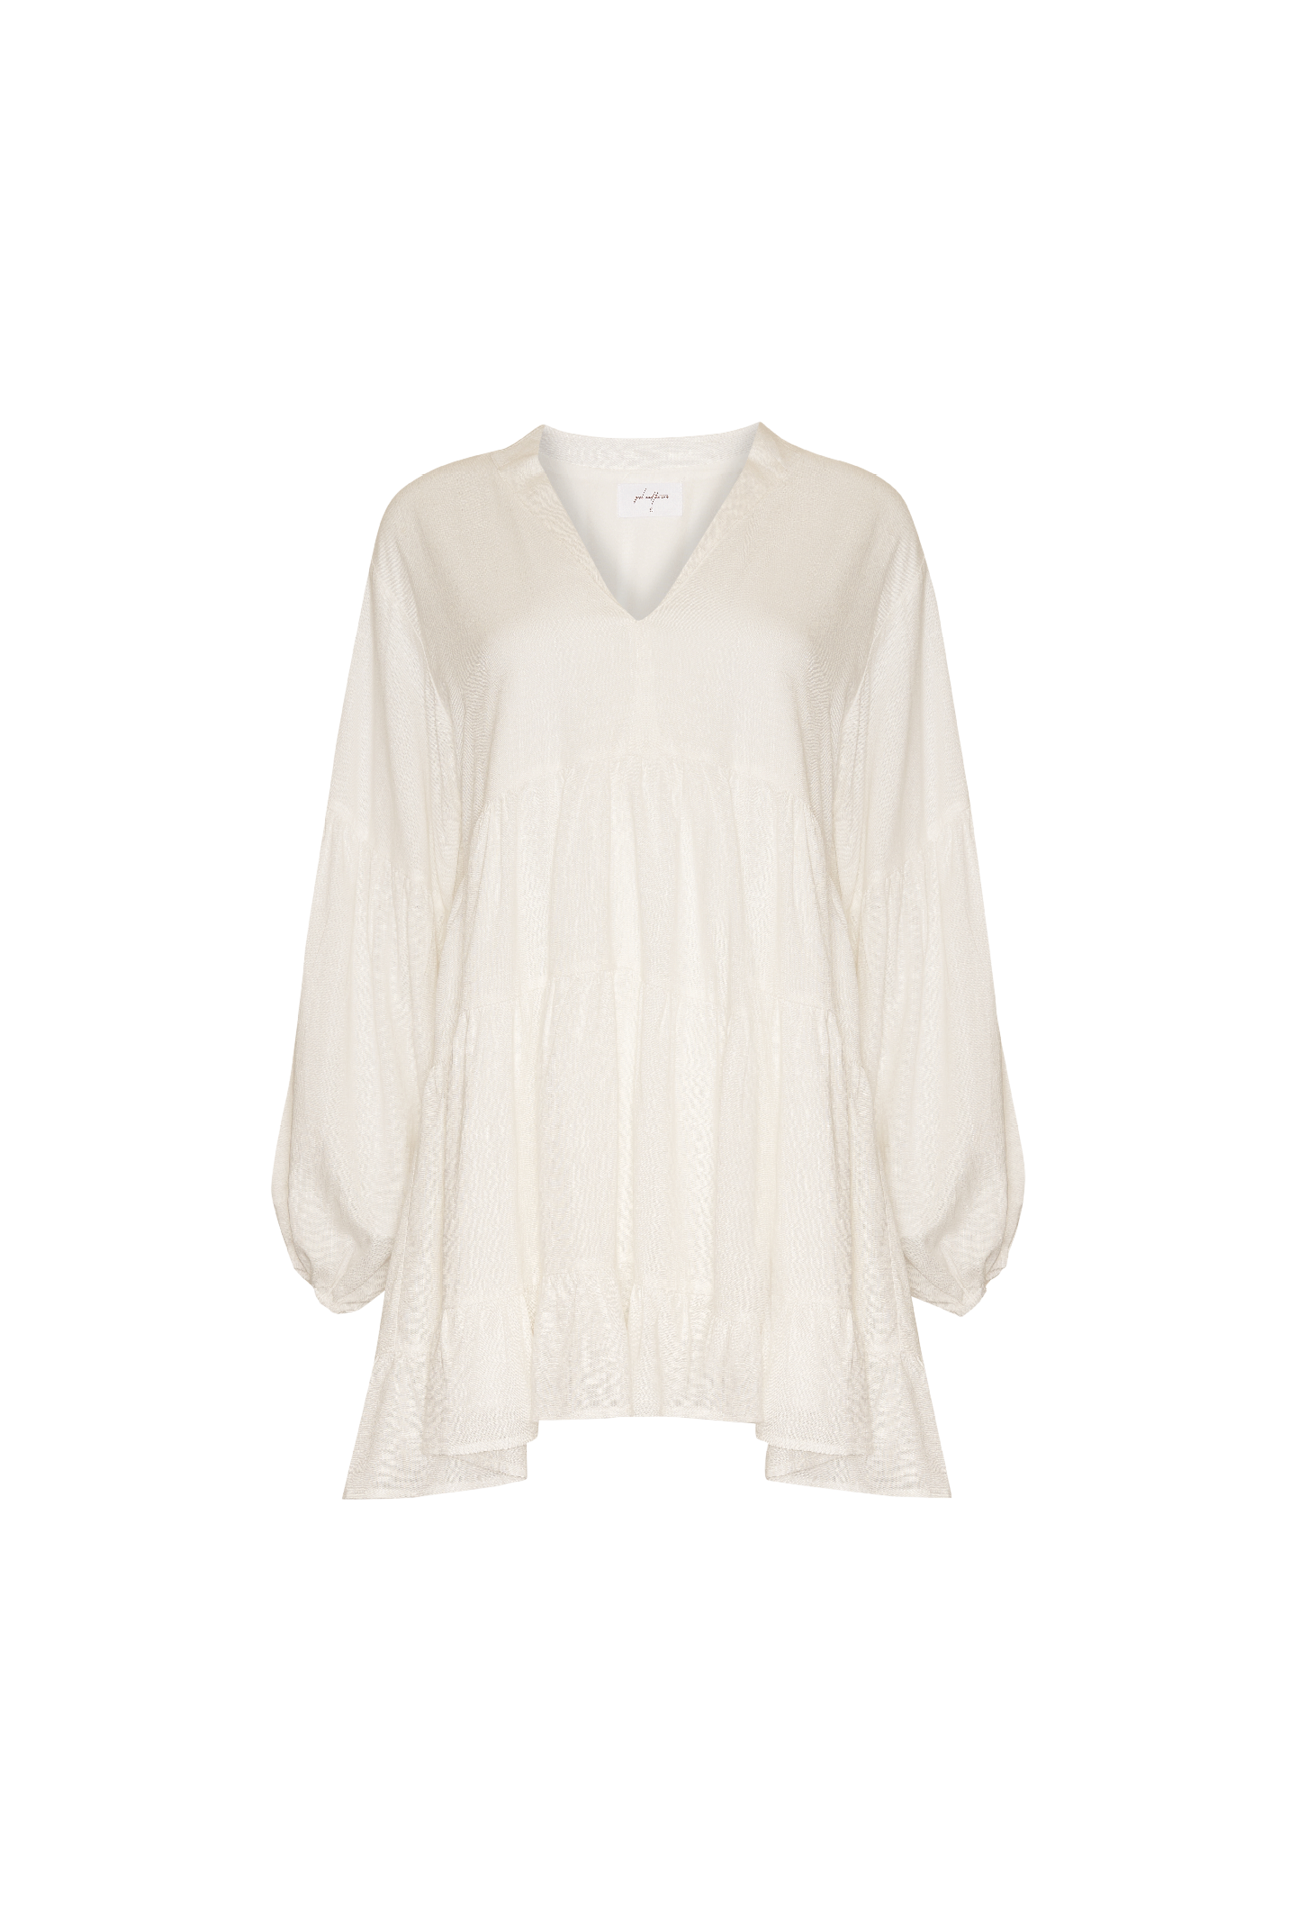 GALA MINI DRESS - WHITE